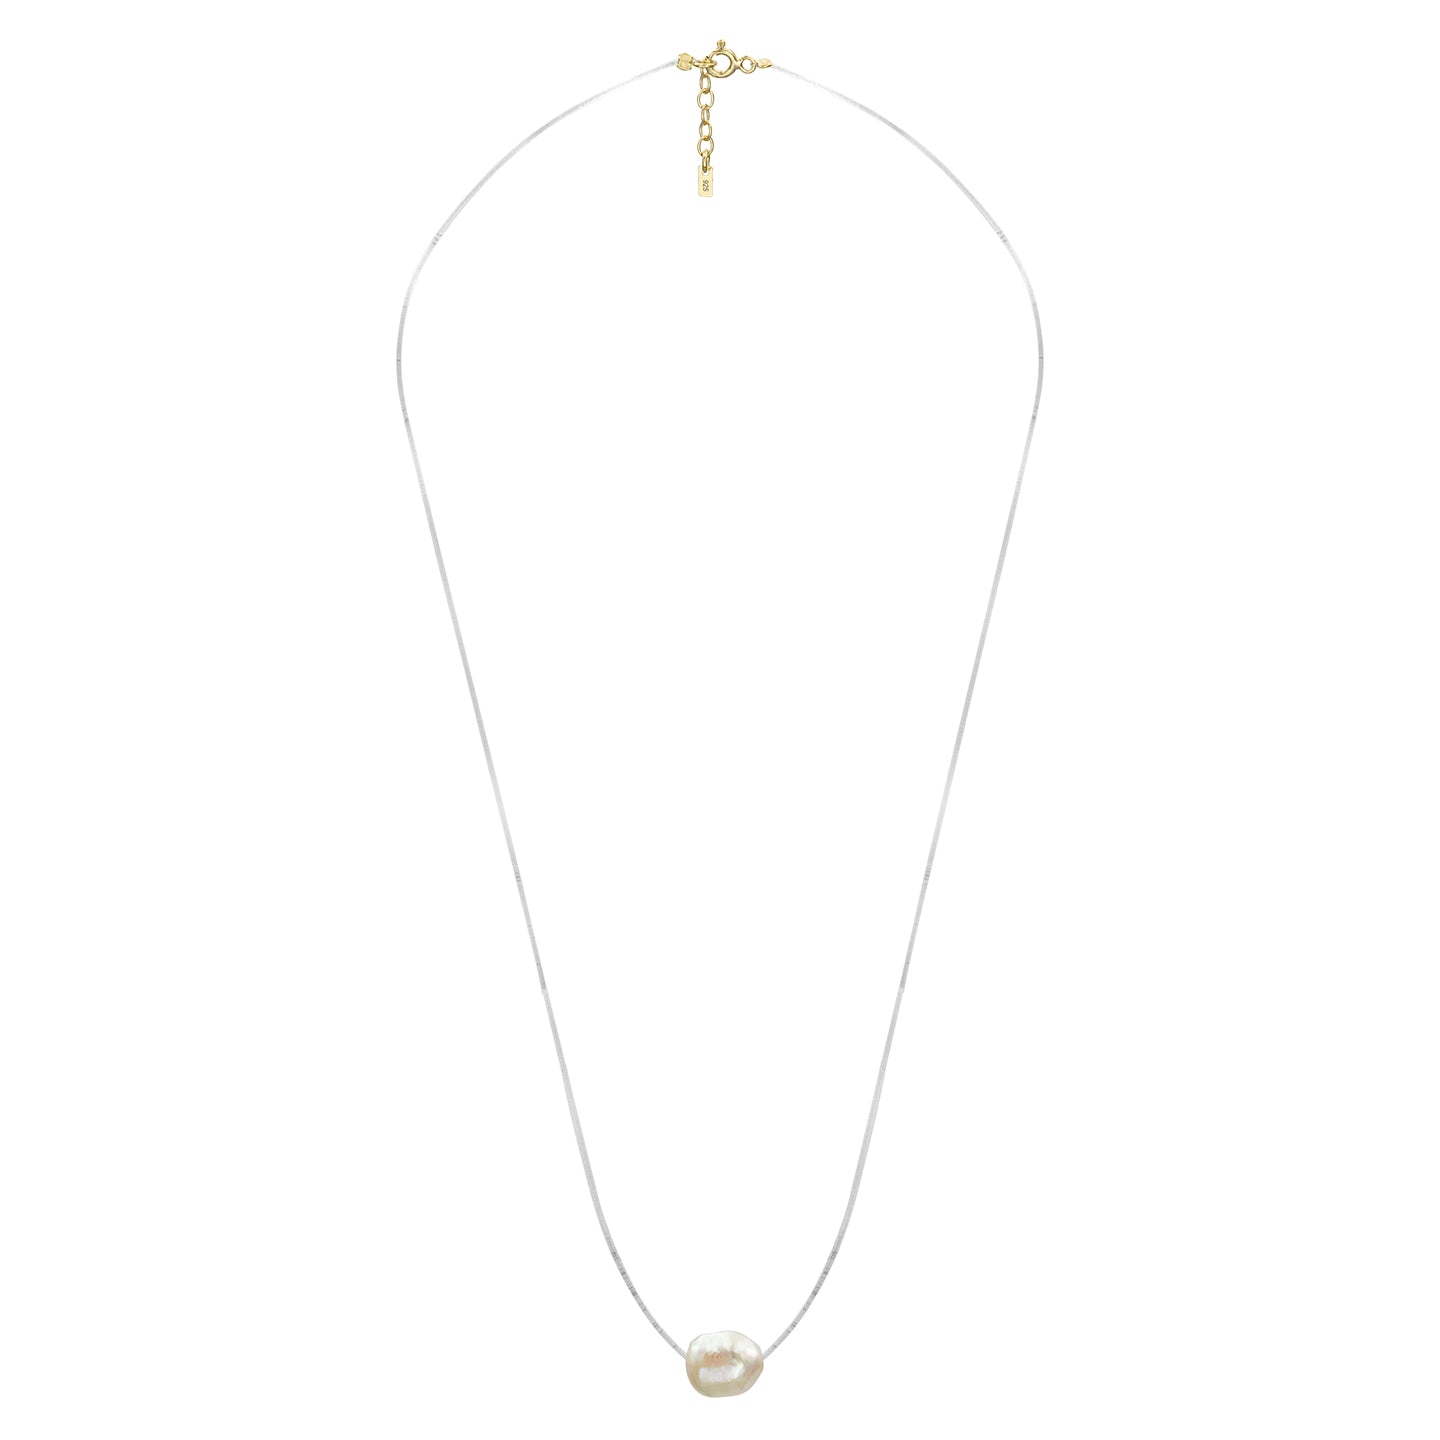 Lantisor cu fir transparent argint si perla Magic Pearl - placat aur galben 18K